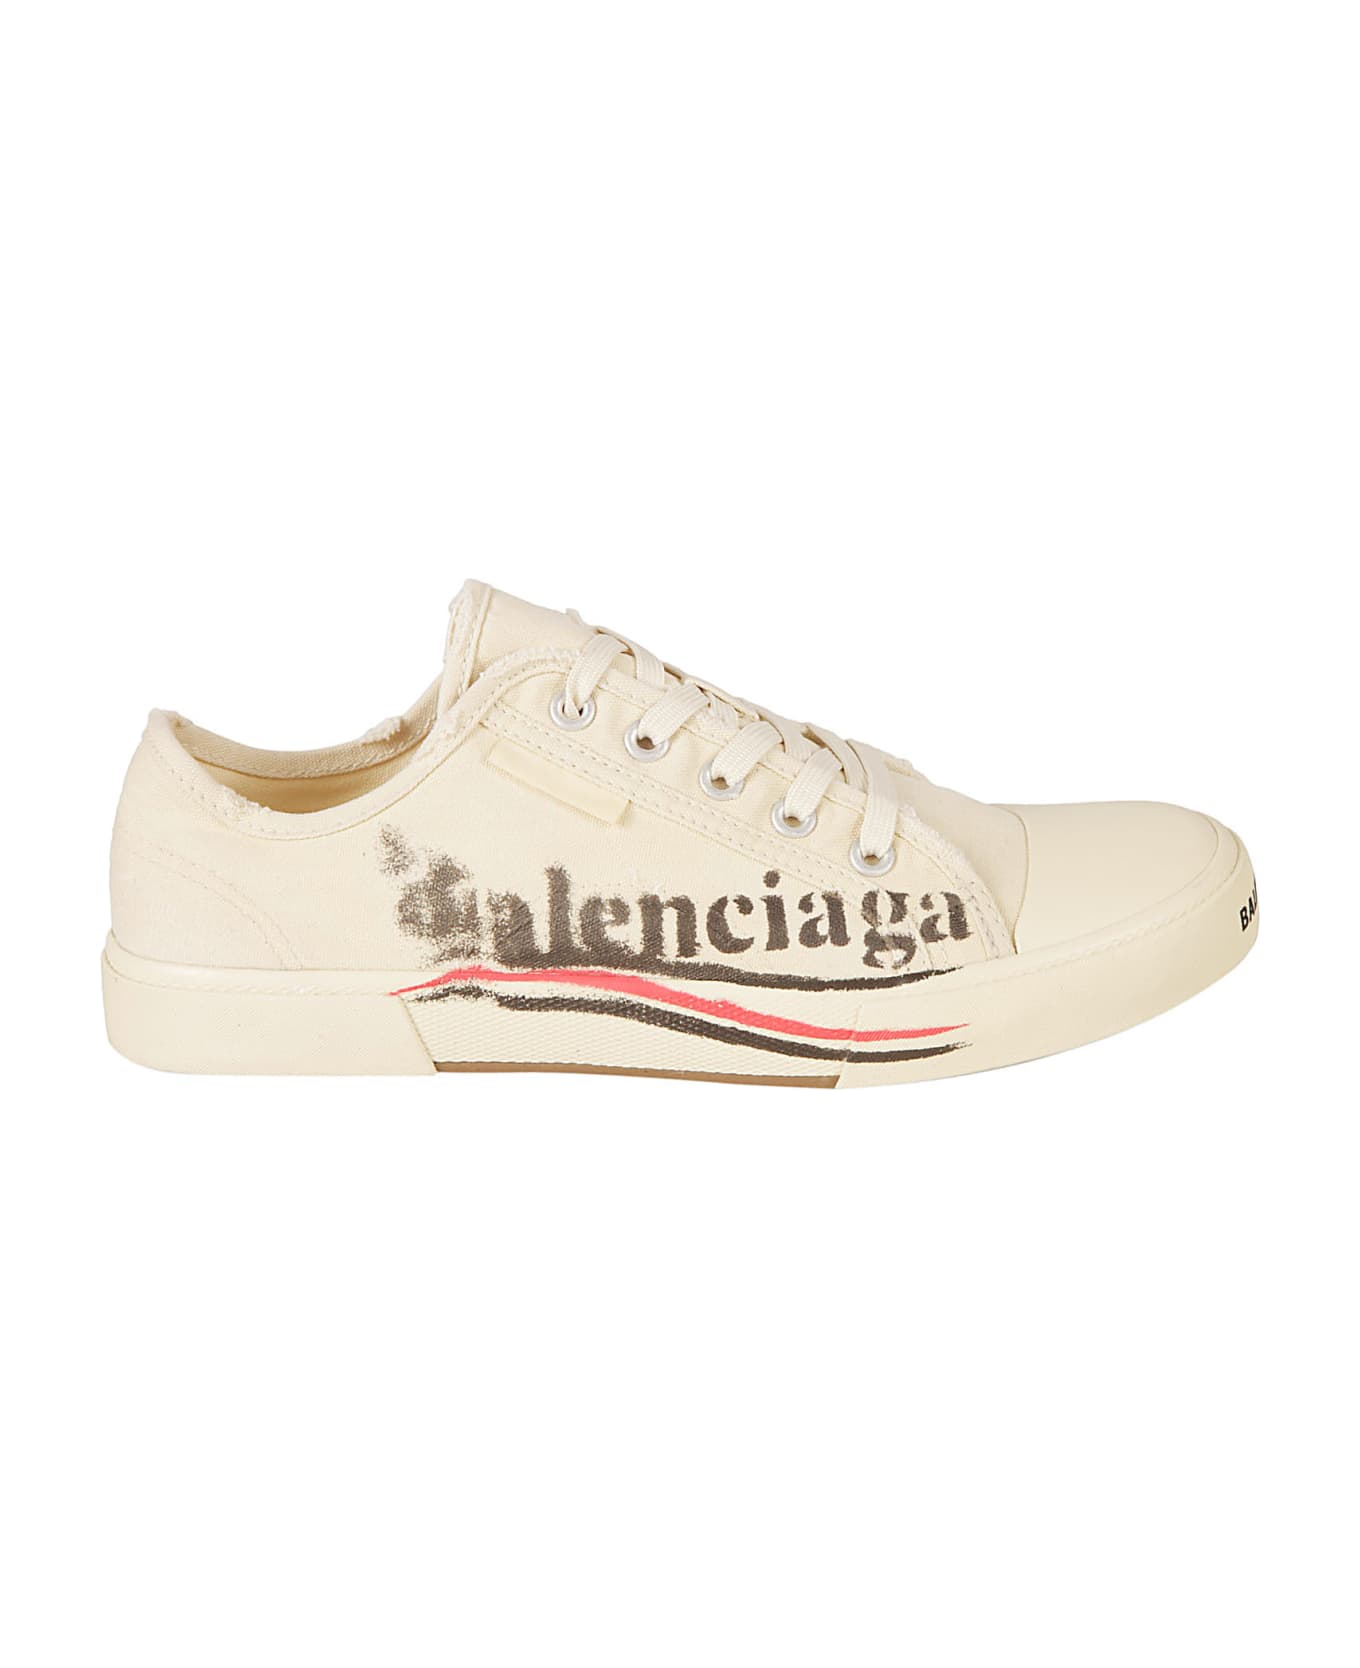 Balenciaga Paris Low Top Sneakers - White スニーカー